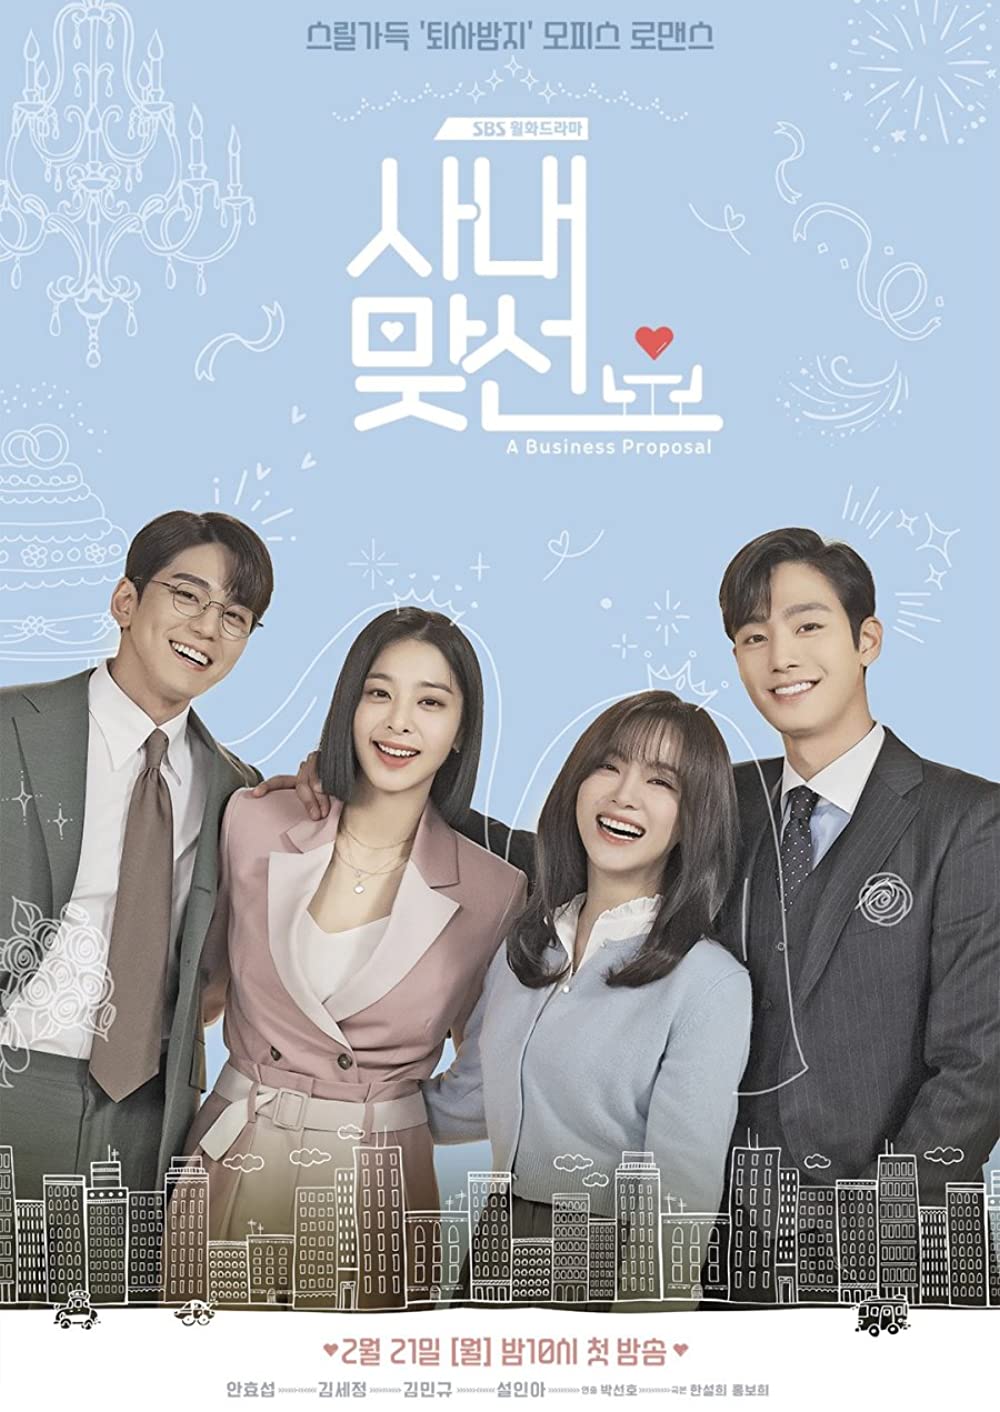 9 Drama Korea rating tinggi minggu ketiga Maret 2022, kisah kian rumit